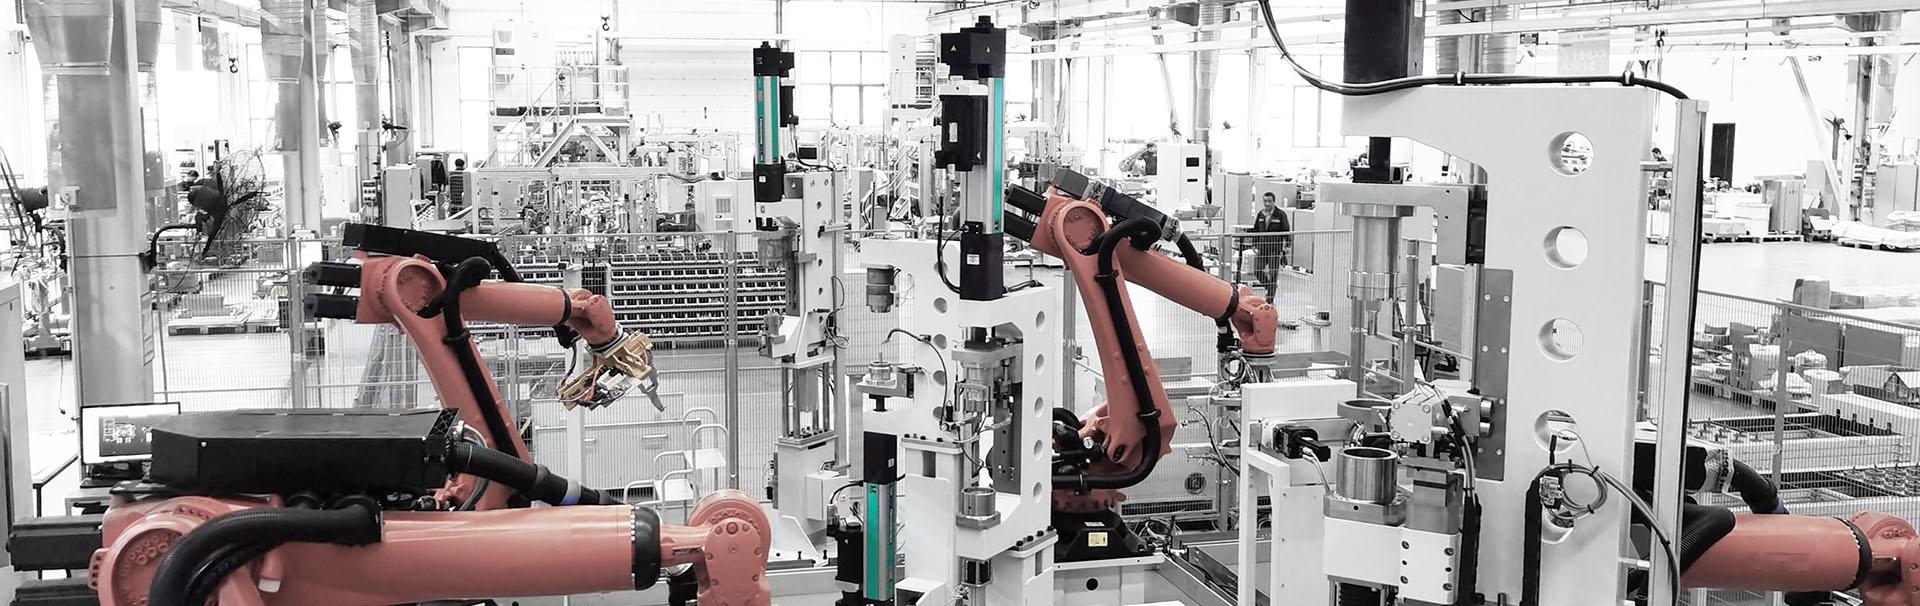 TOX® ElectricDrive - Elektromechanische Antriebe in einer Roboterzelle